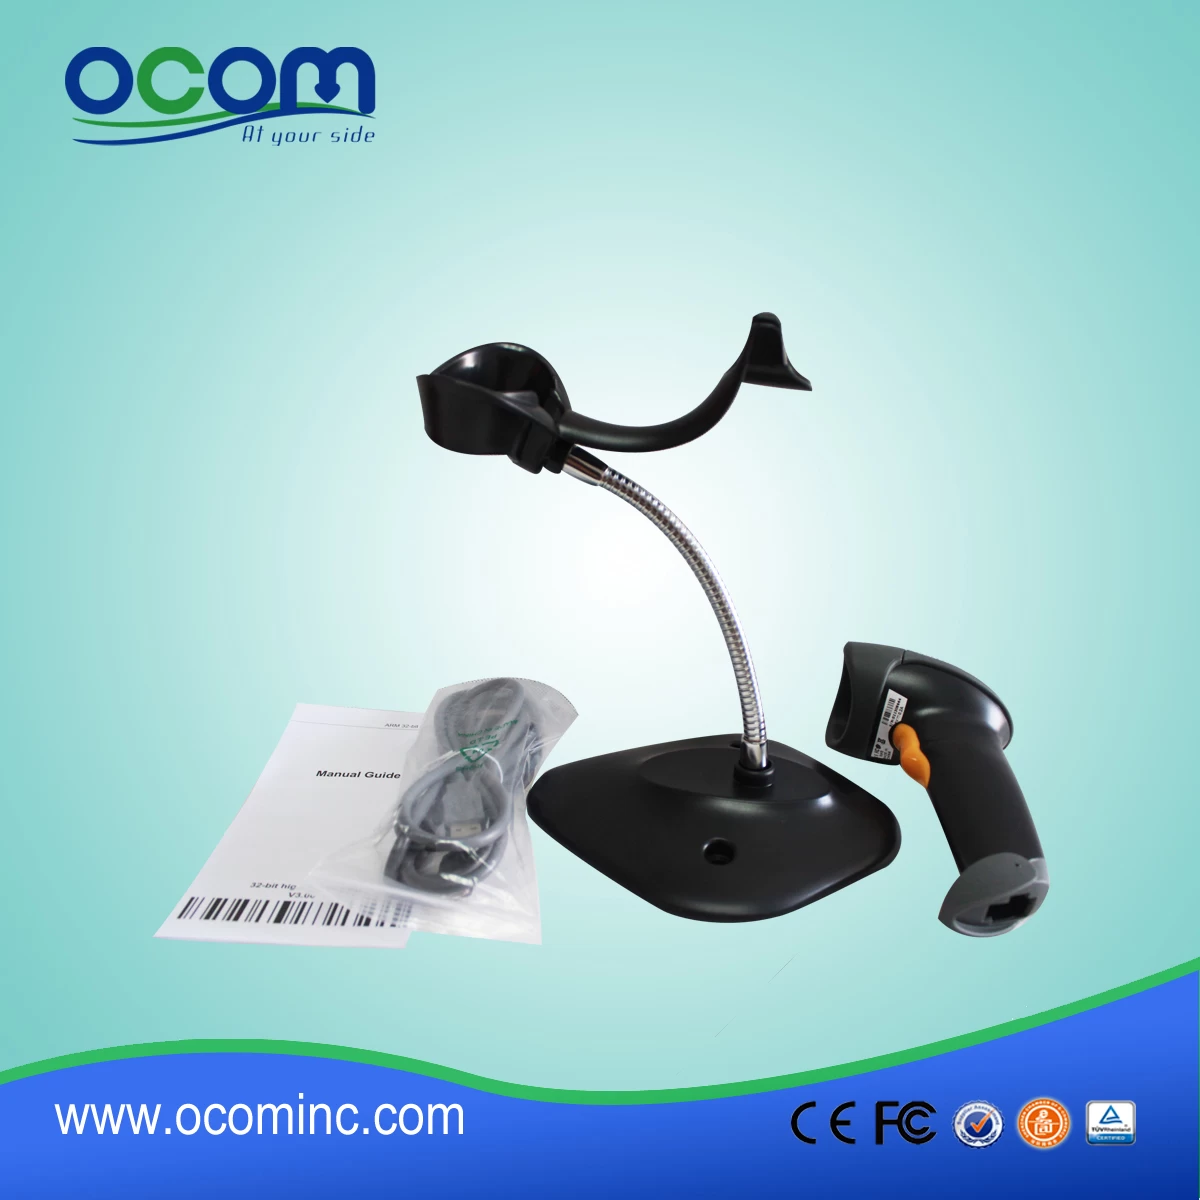 (OCBS-LA12) Auto Sense Handheld Barcode Scanner With Stand